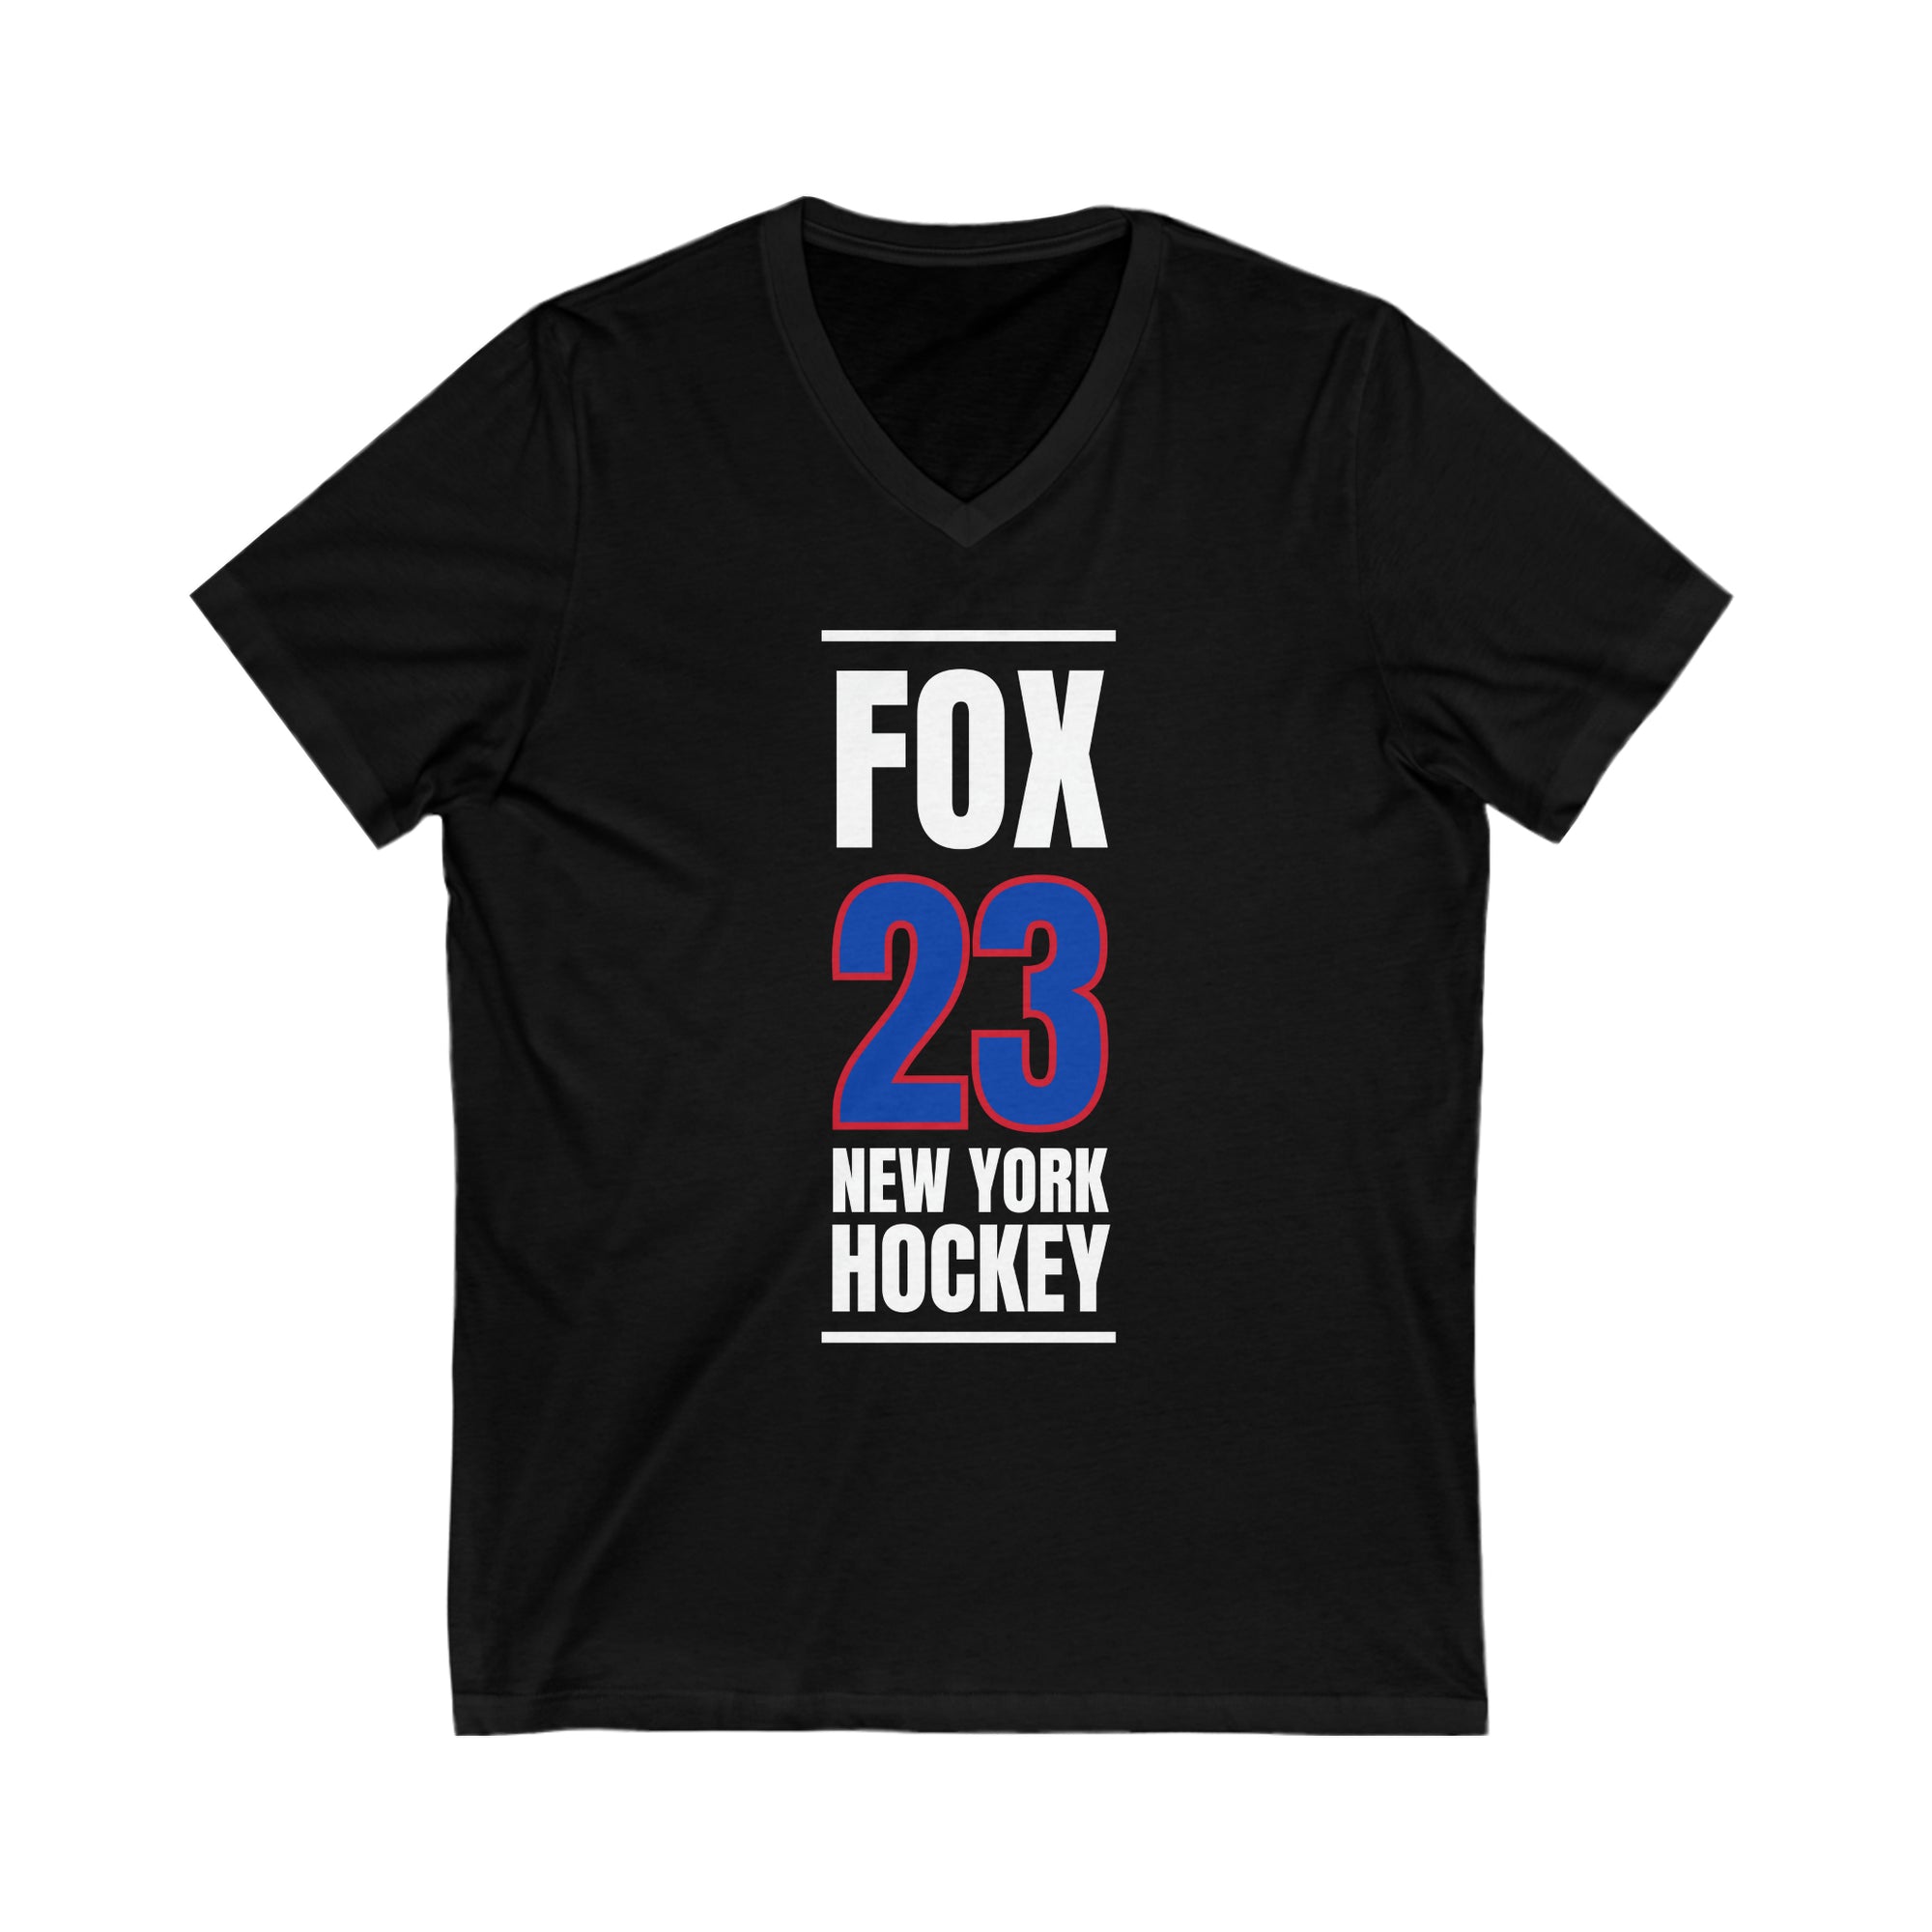 Fox 23 New York Hockey Royal Blue Vertical Design Unisex V-Neck Tee